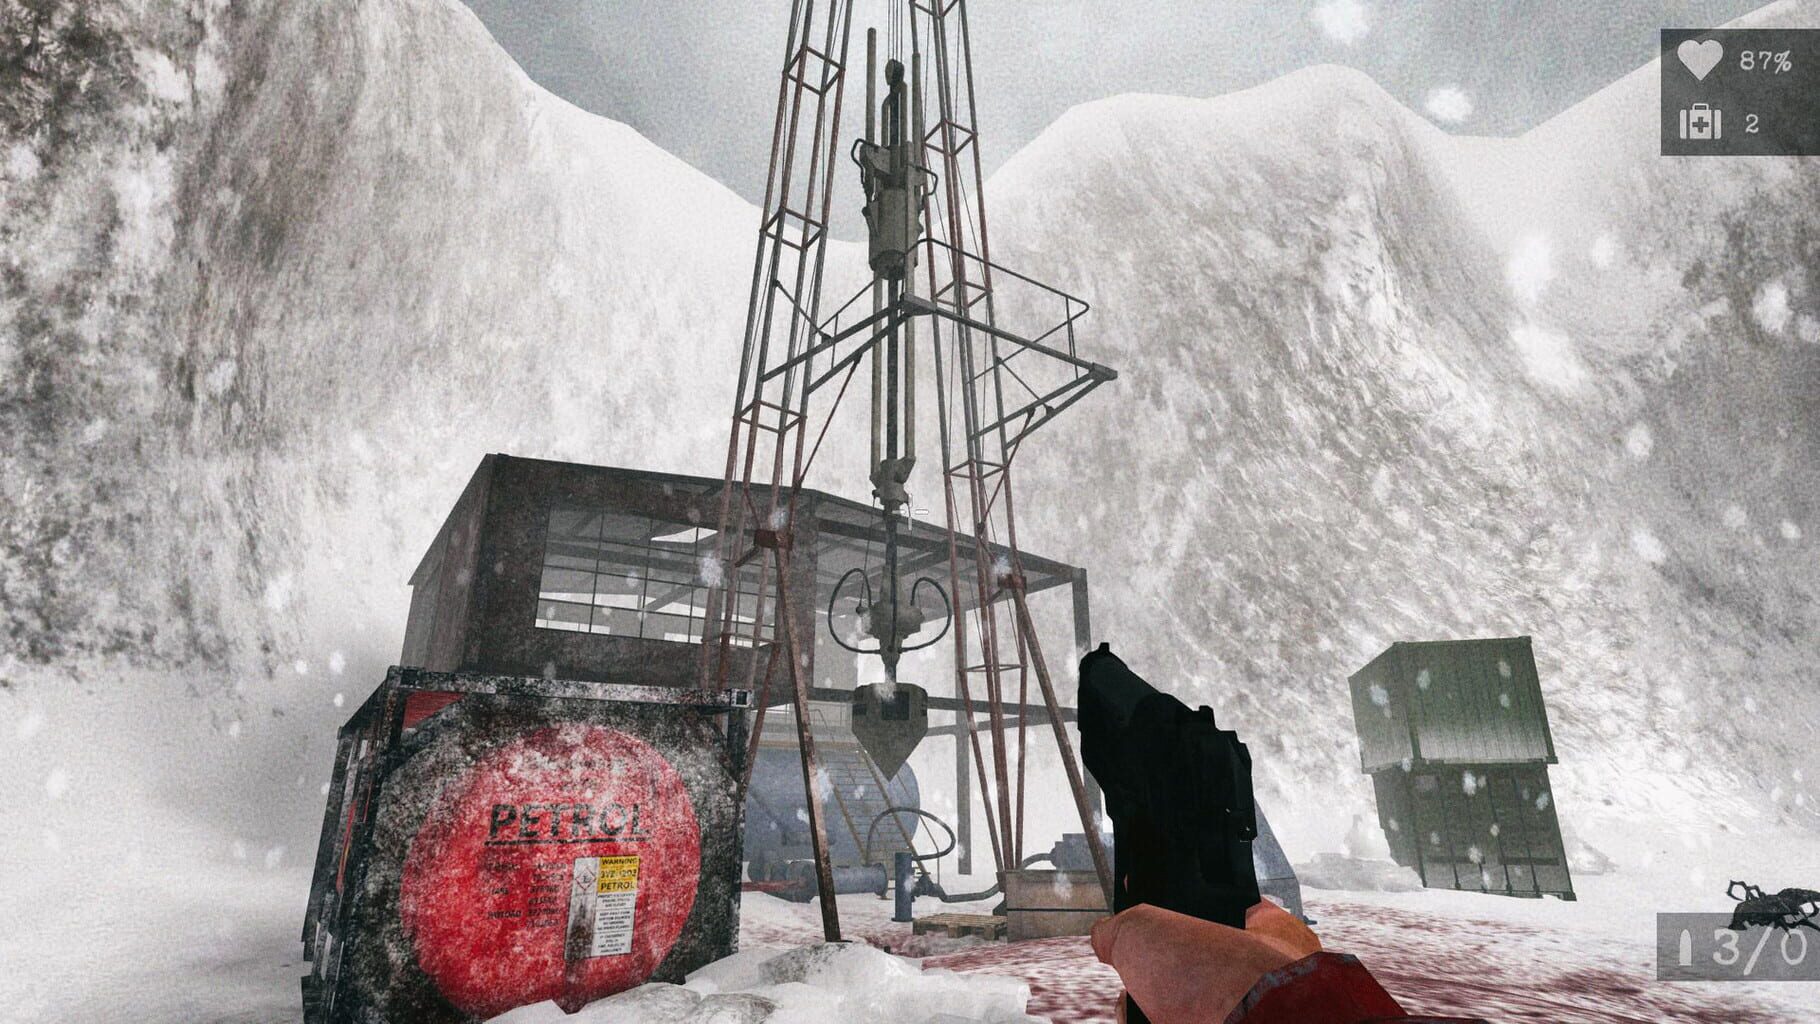 Antarctica 88 screenshot